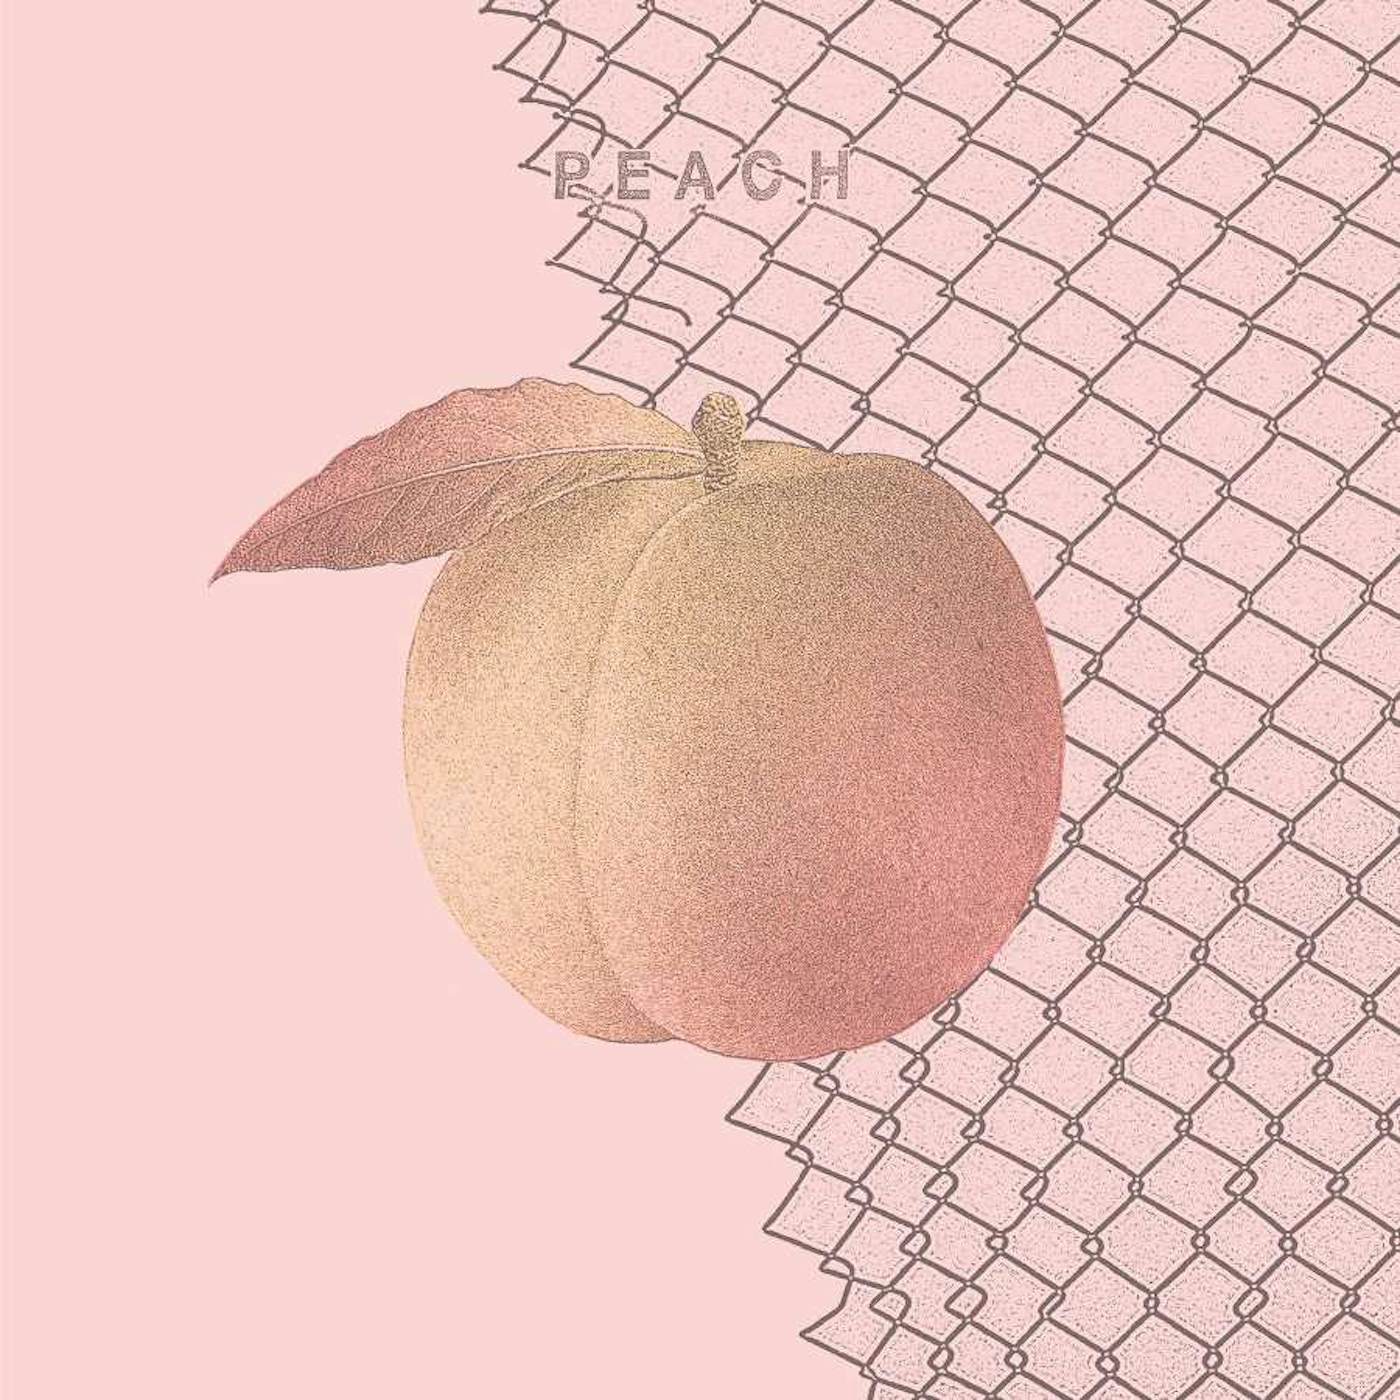 Culture Abuse Peach (Lp) Vinyl Record